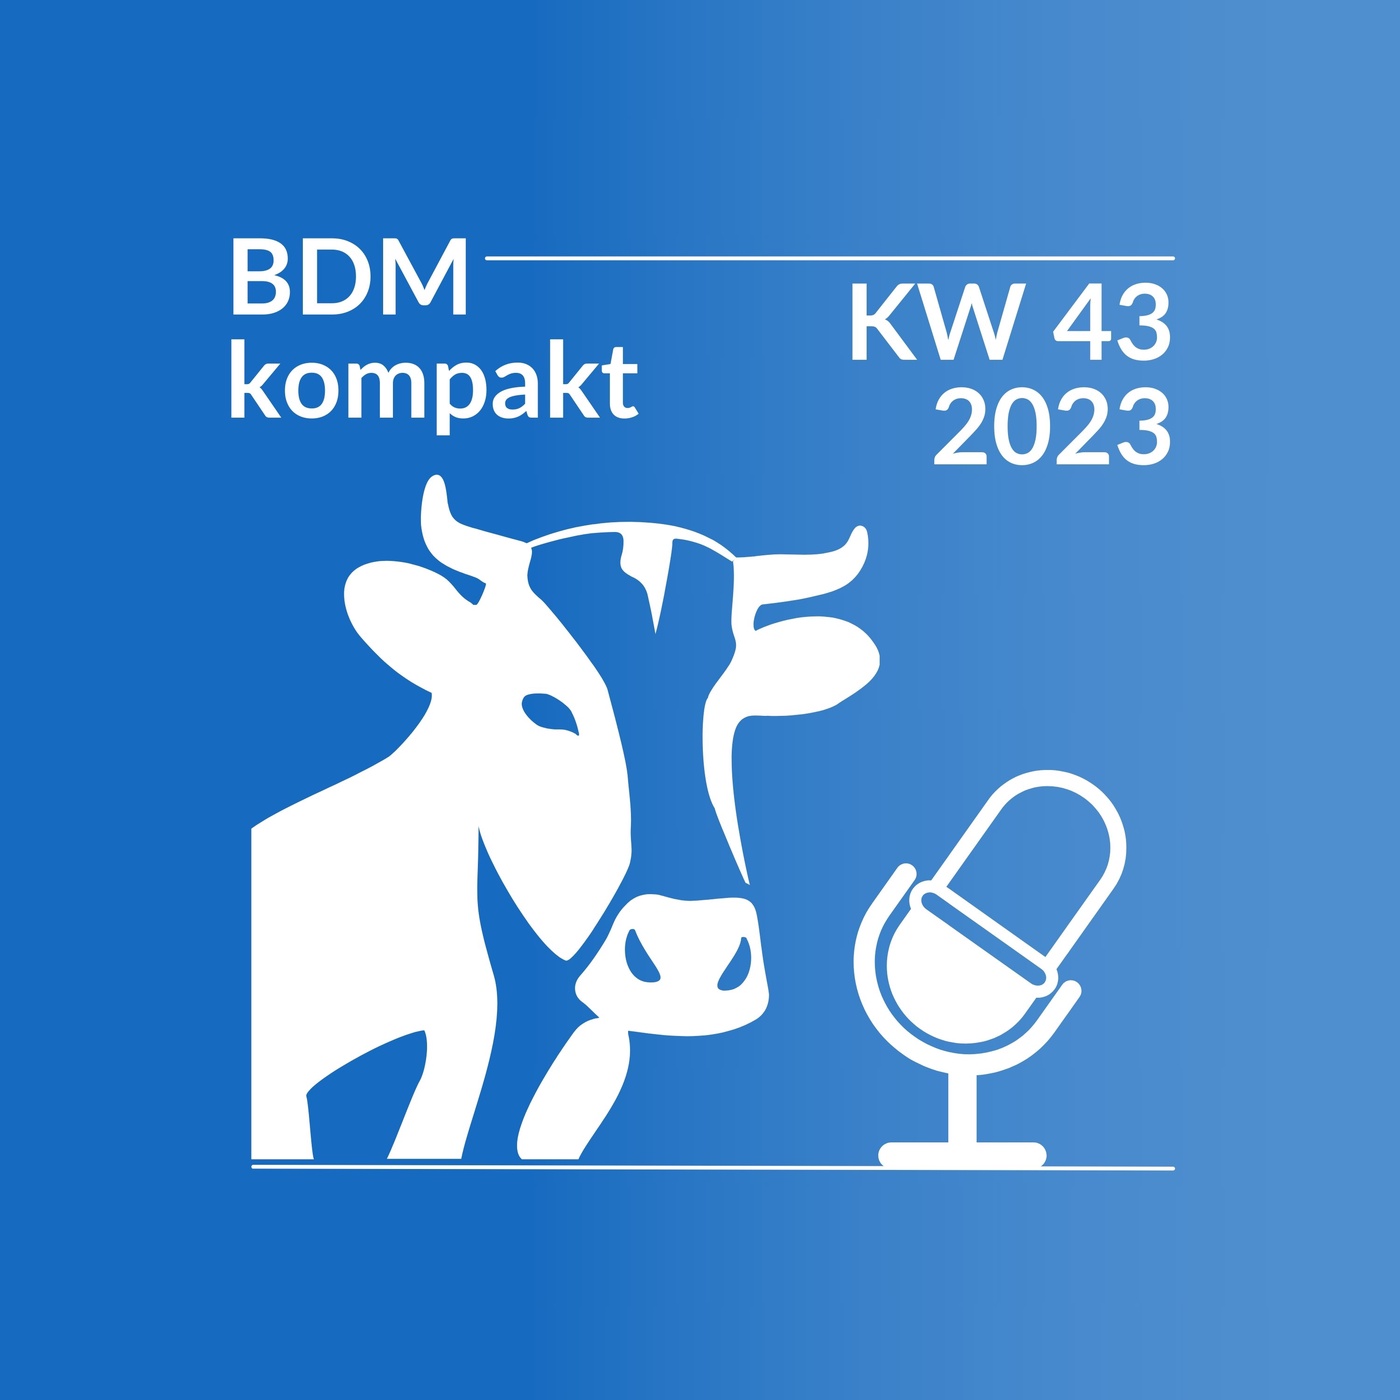 BDM kompakt KW 43/2023